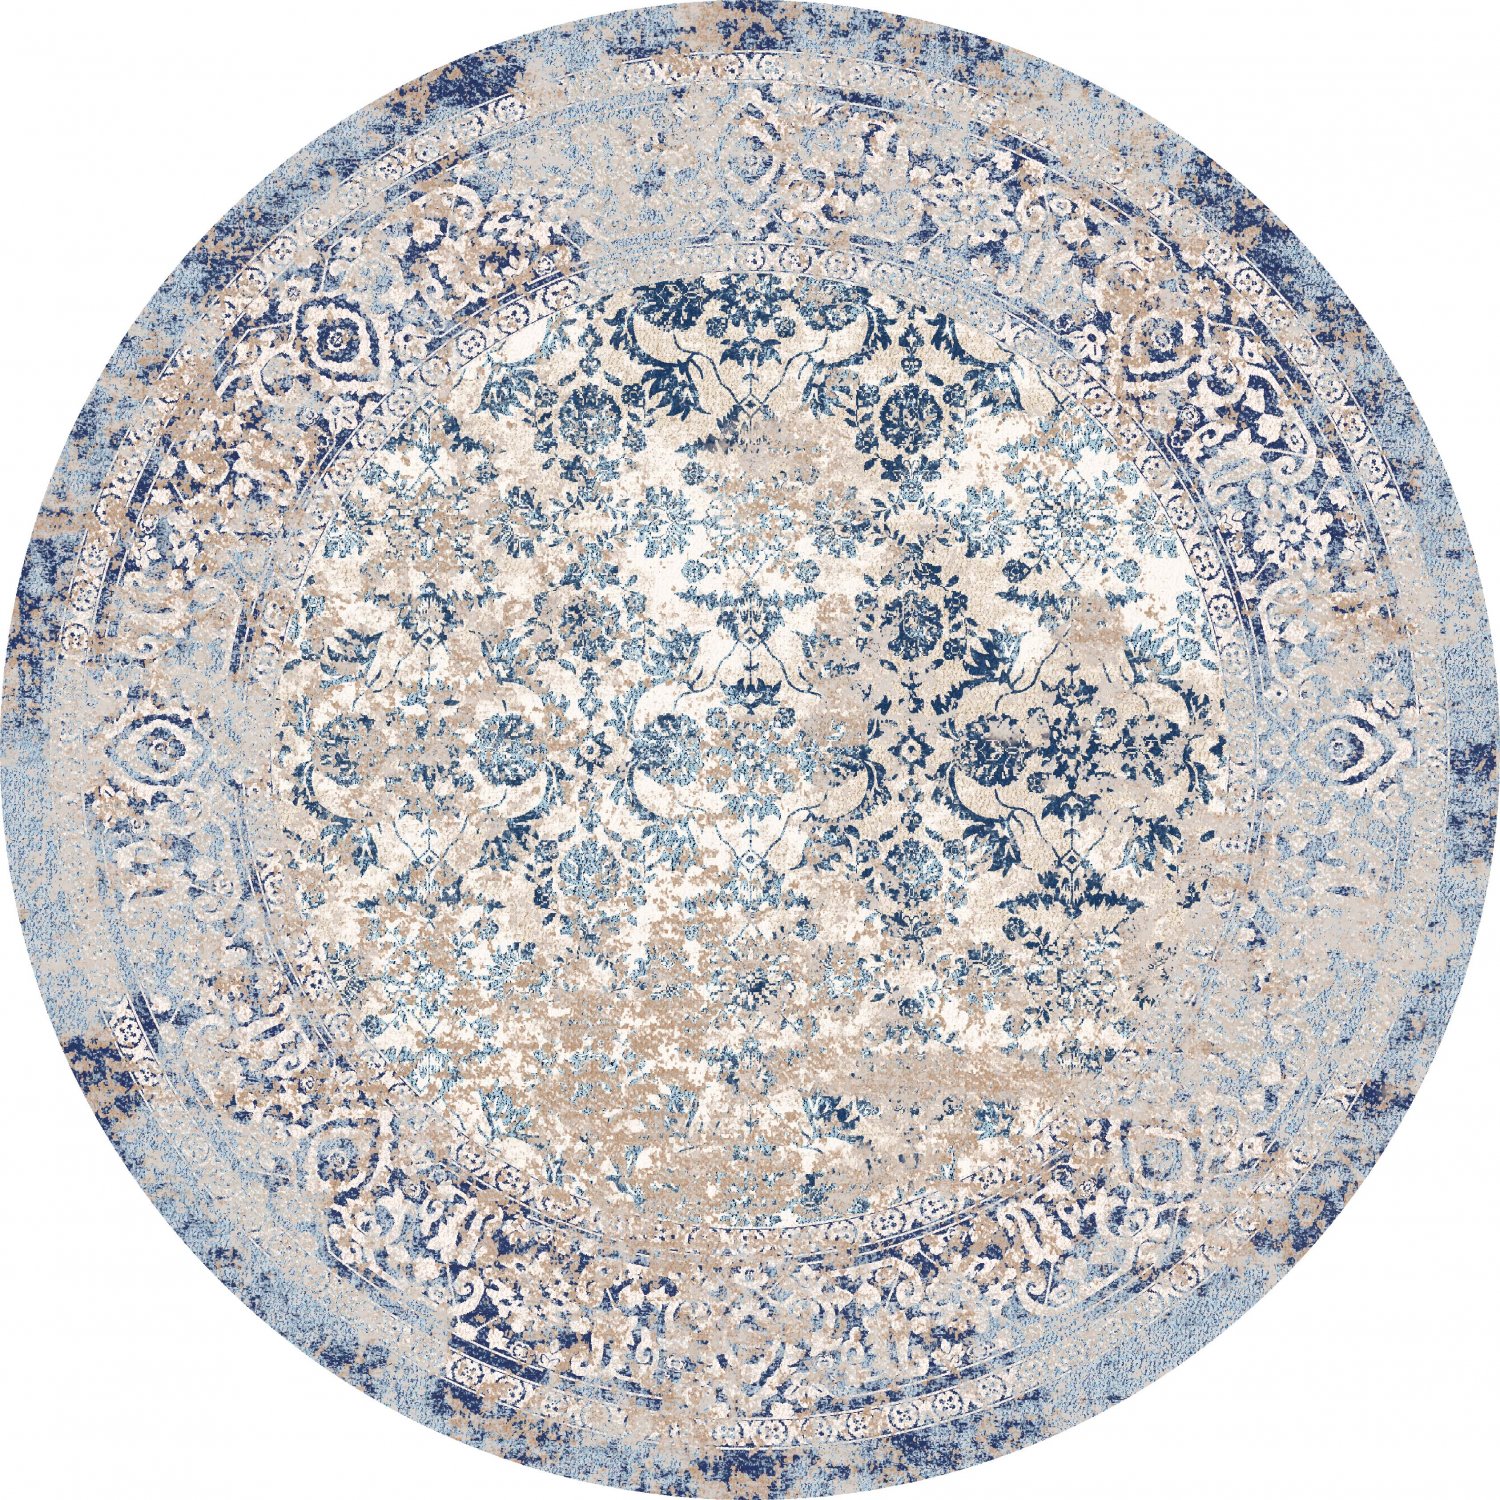 Round rug - Denizli (blue)